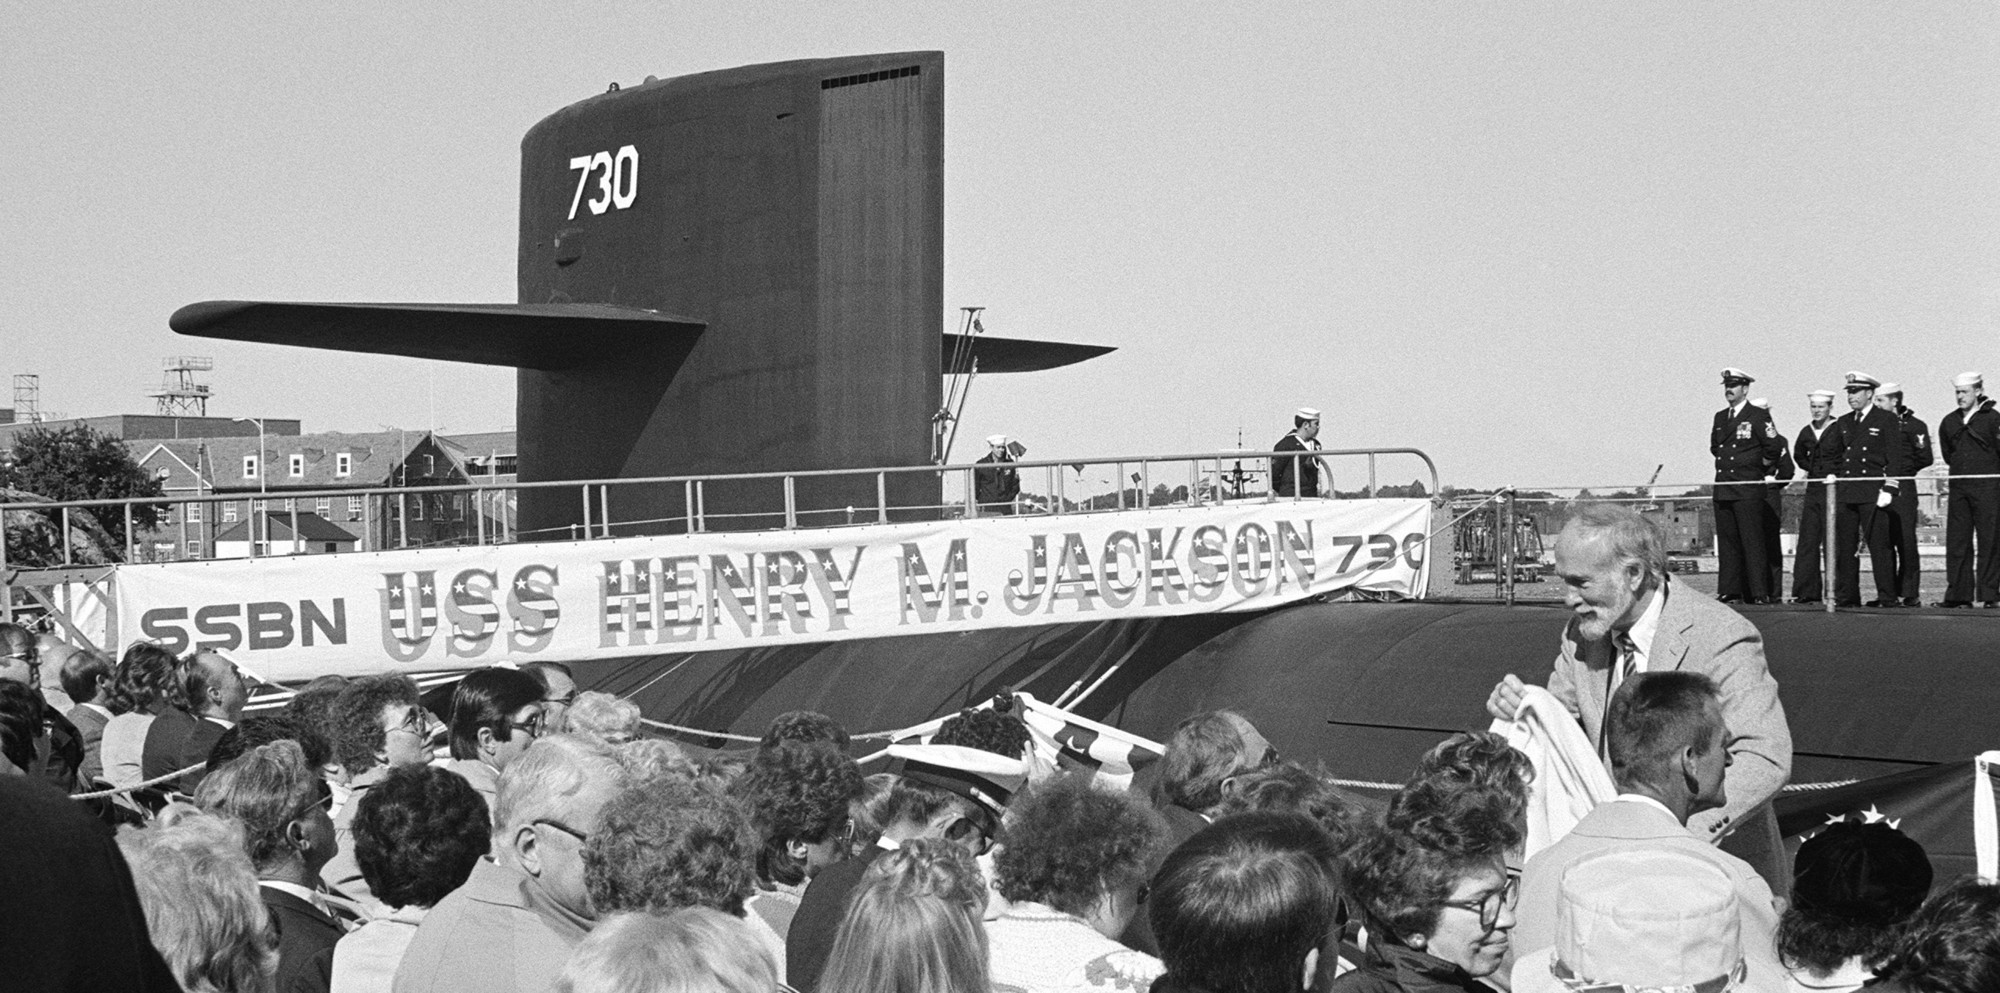 ssbn-730 uss henry m. jackson ohio class ballistic missile submarine 1984 26 commissioning ceremony groton connecticut